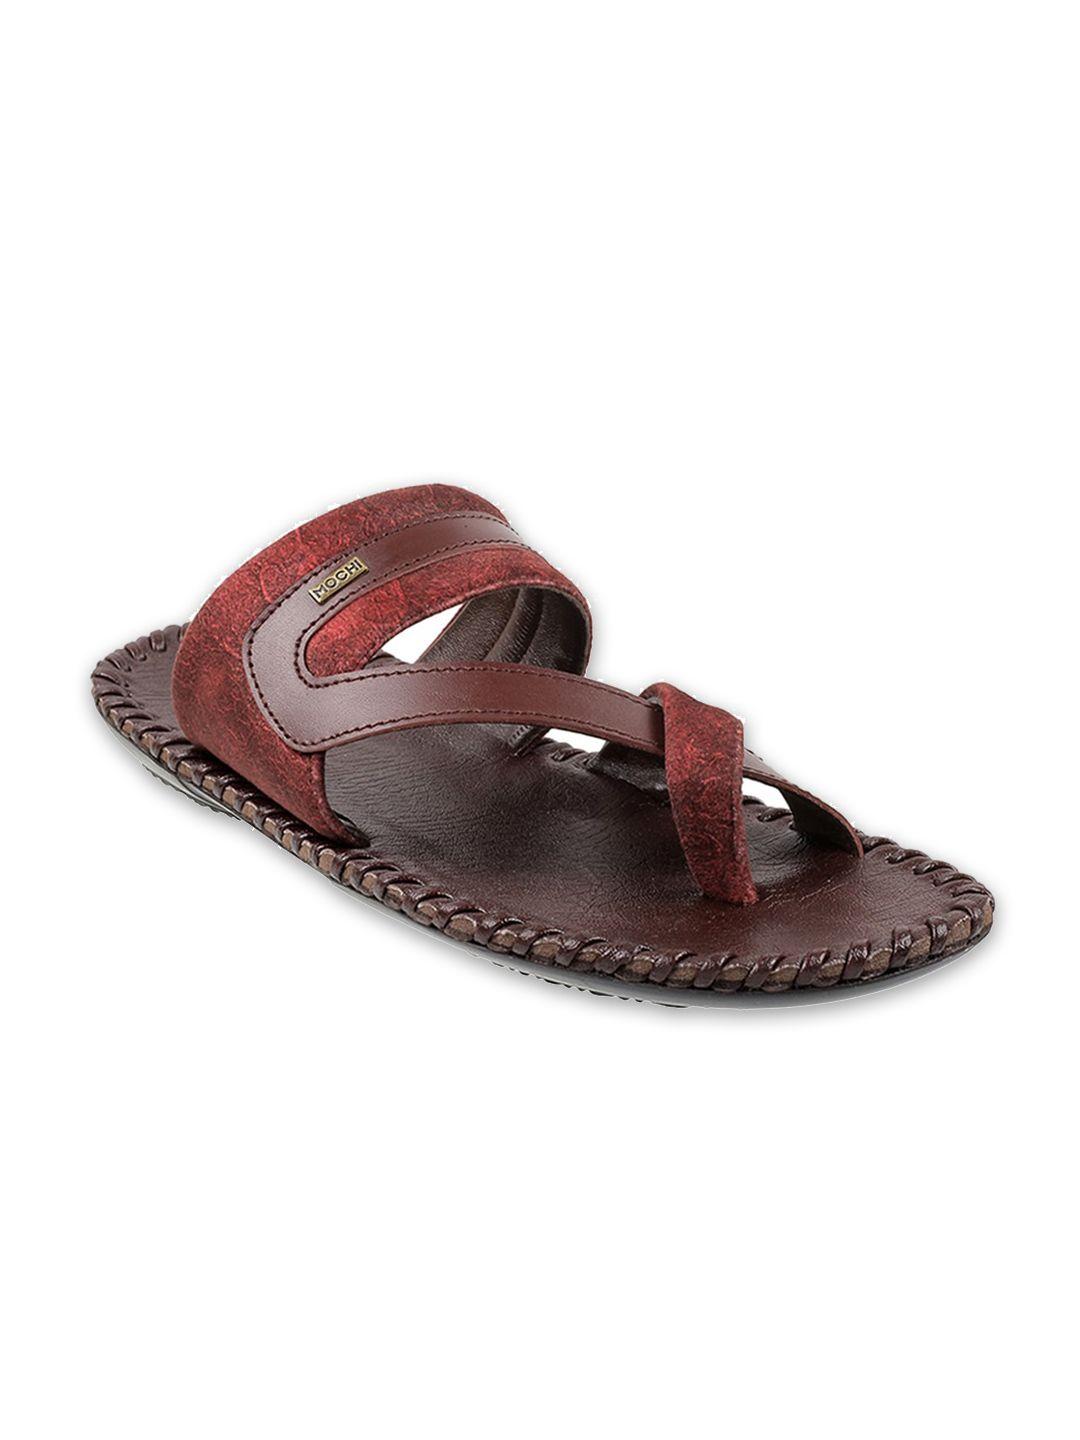 mochi men maroon leather comfort sandals